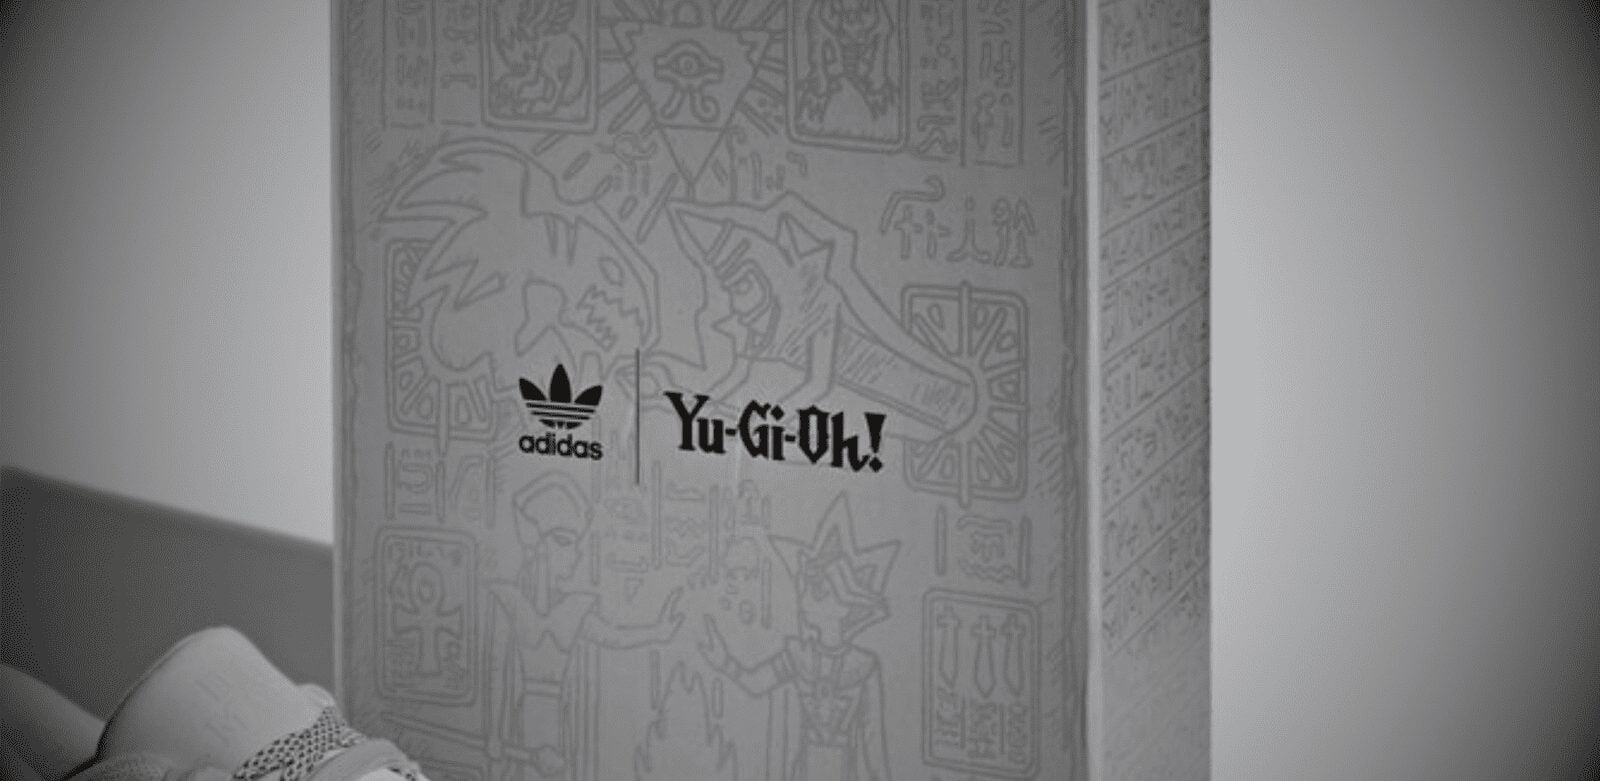 Yu-Gi-Oh! : une collection avec Adidas dévoilée